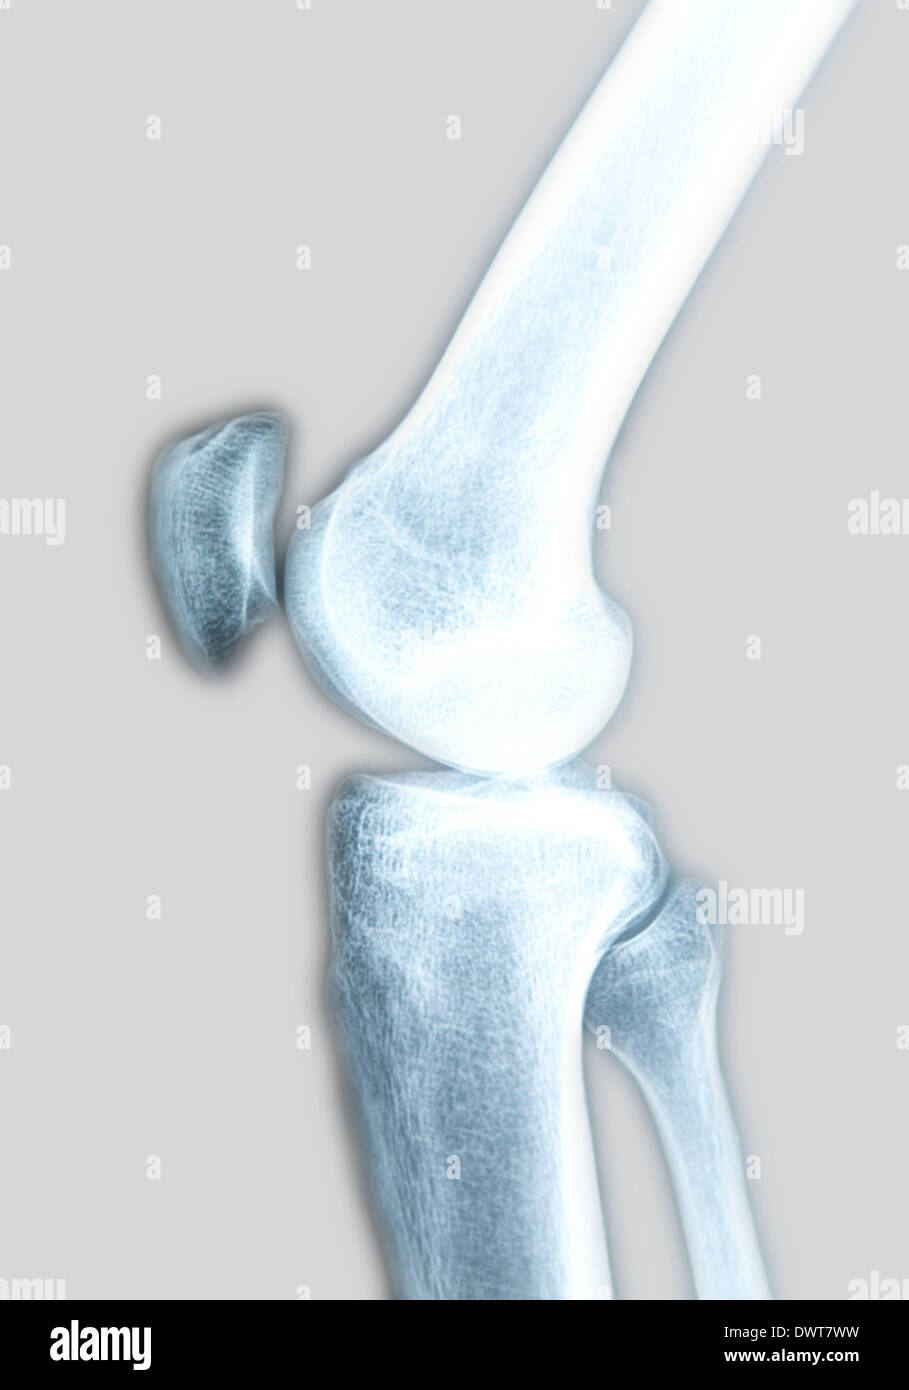 Knee x ray Stock Photo - Alamy